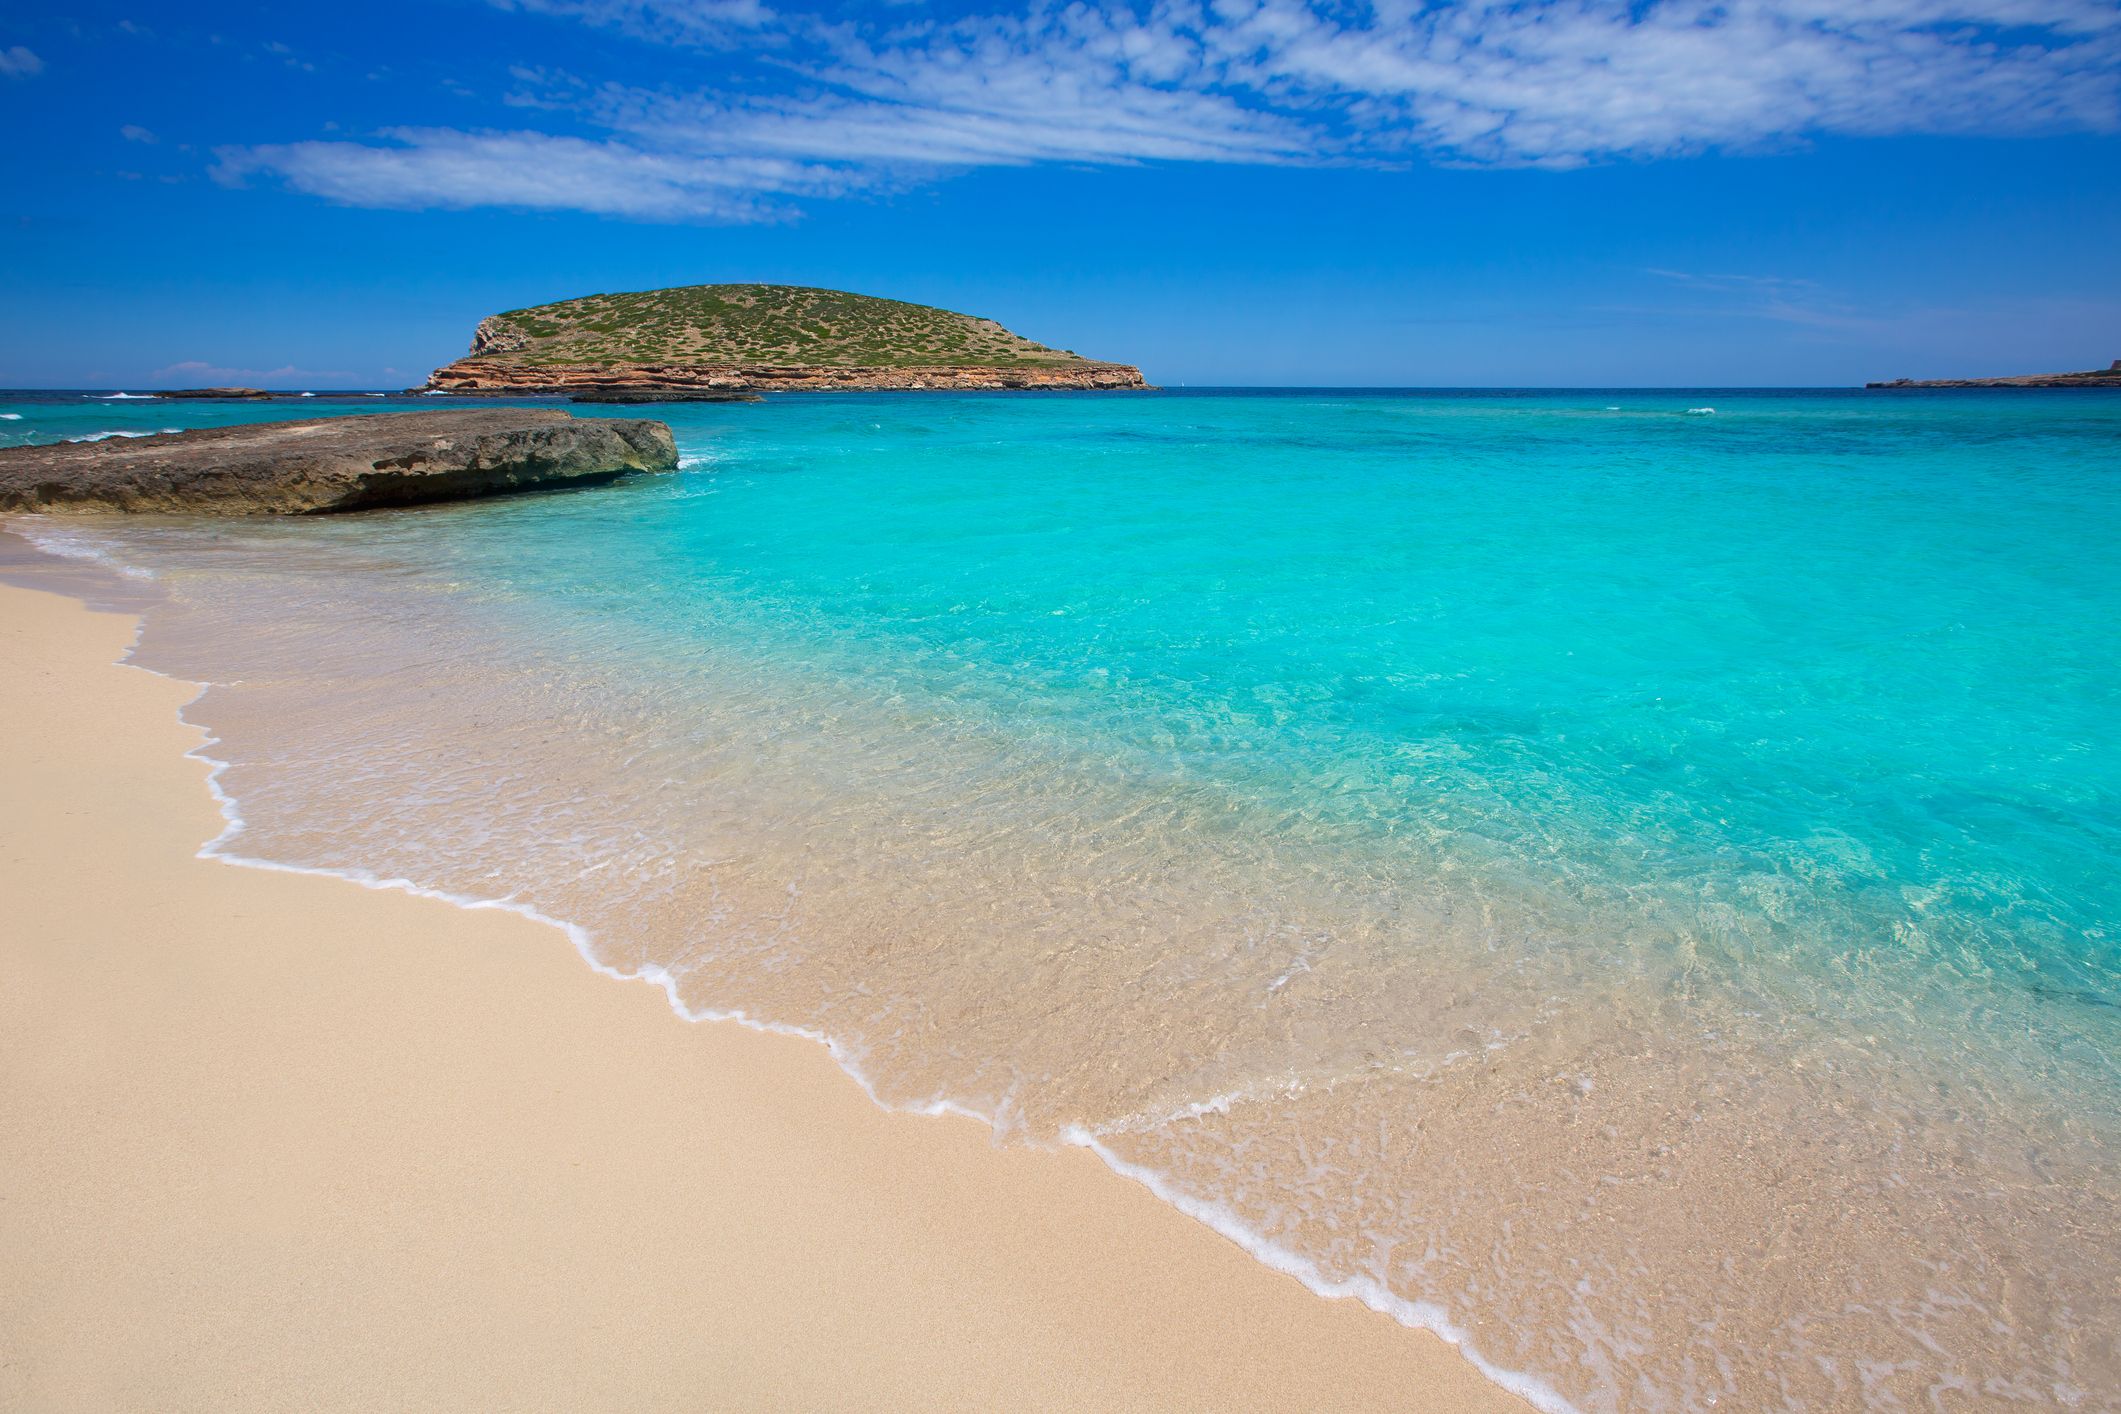 Mooiste stranden op Ibiza: 5 (onontdekte) stranden op rij